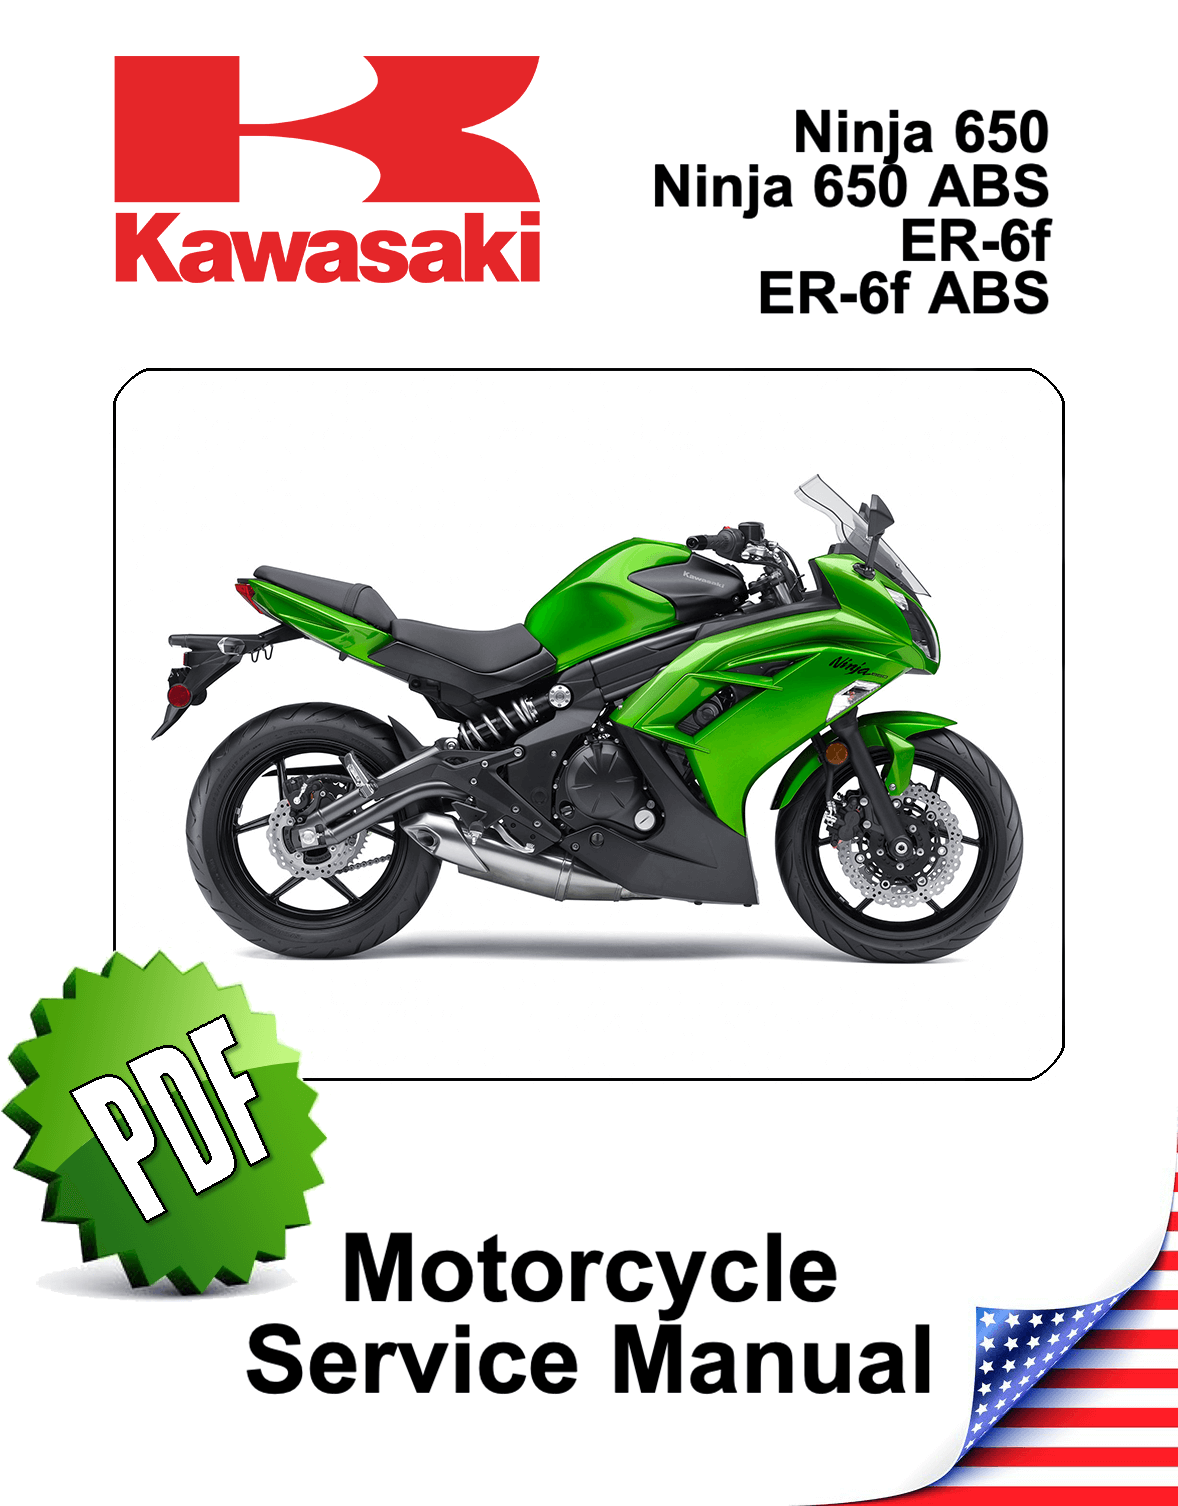 Kawasaki Ninja 650 Service Manual